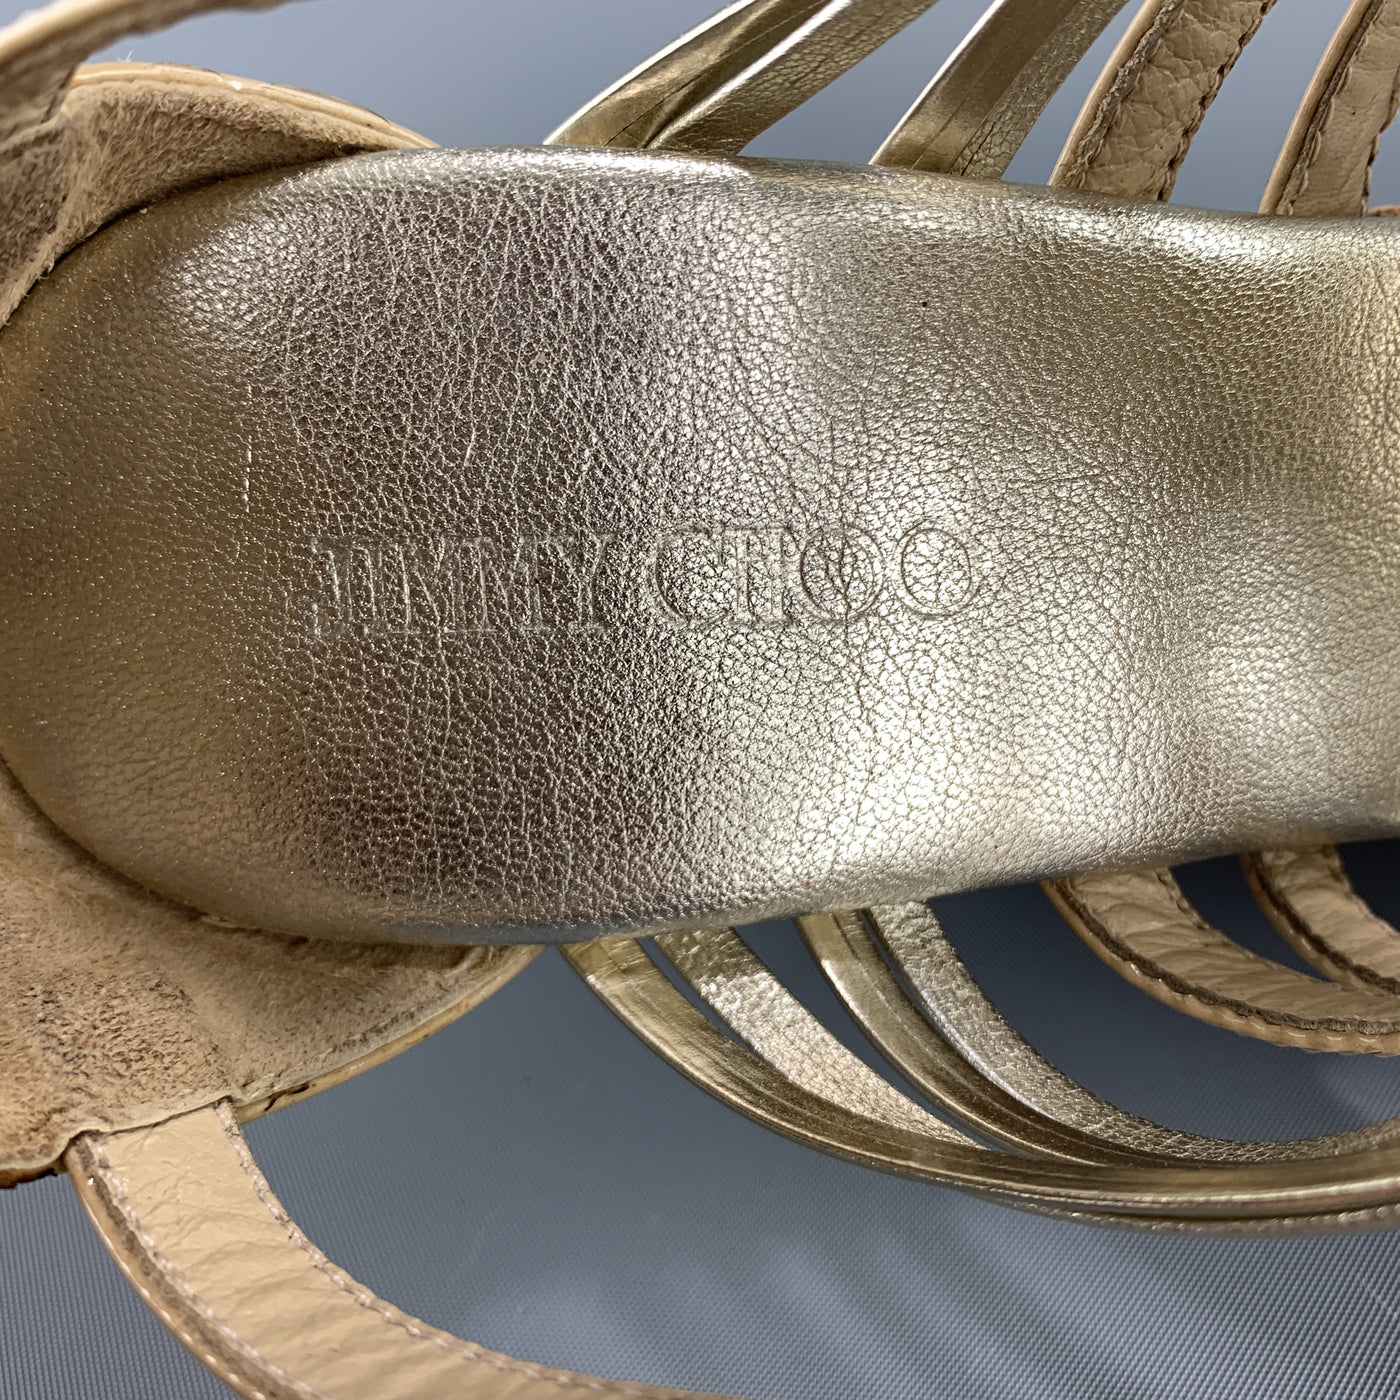 JIMMY CHOO Size 7 Beige & Silver Patent Leather Cork Wedge Platform Sandals